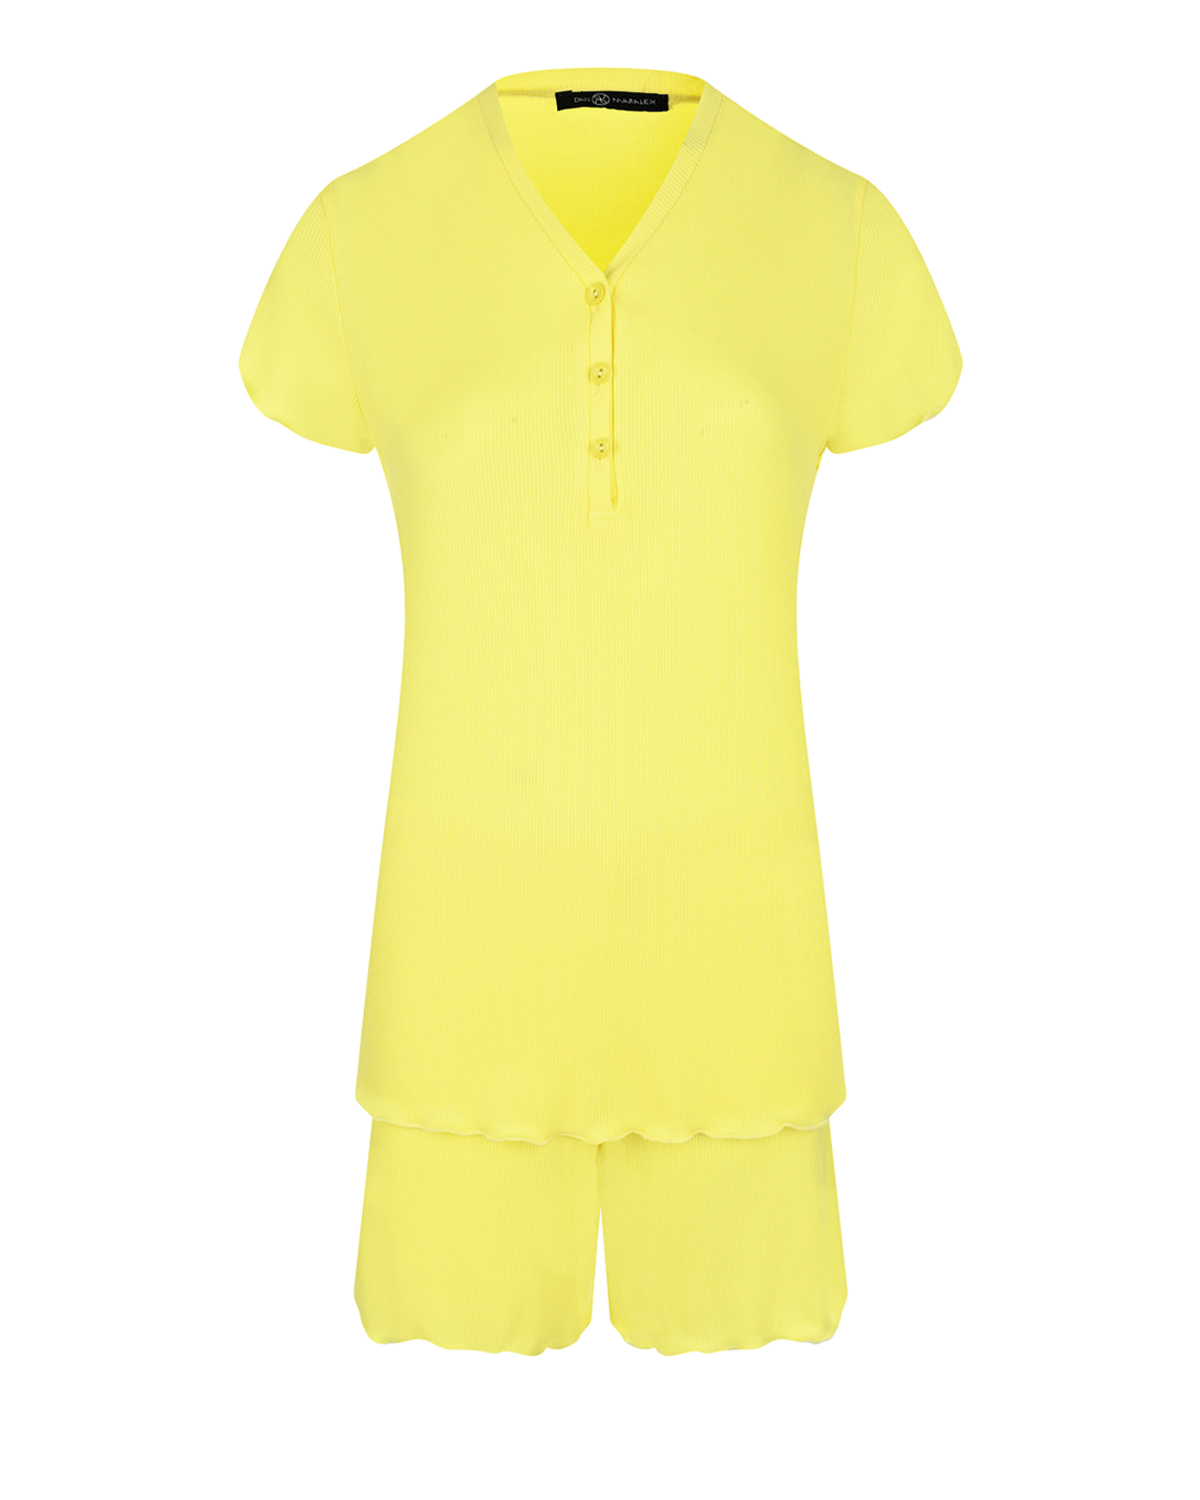 Желтая пижама: футболка и шорты Dan Maralex, размер 46, цвет желтый